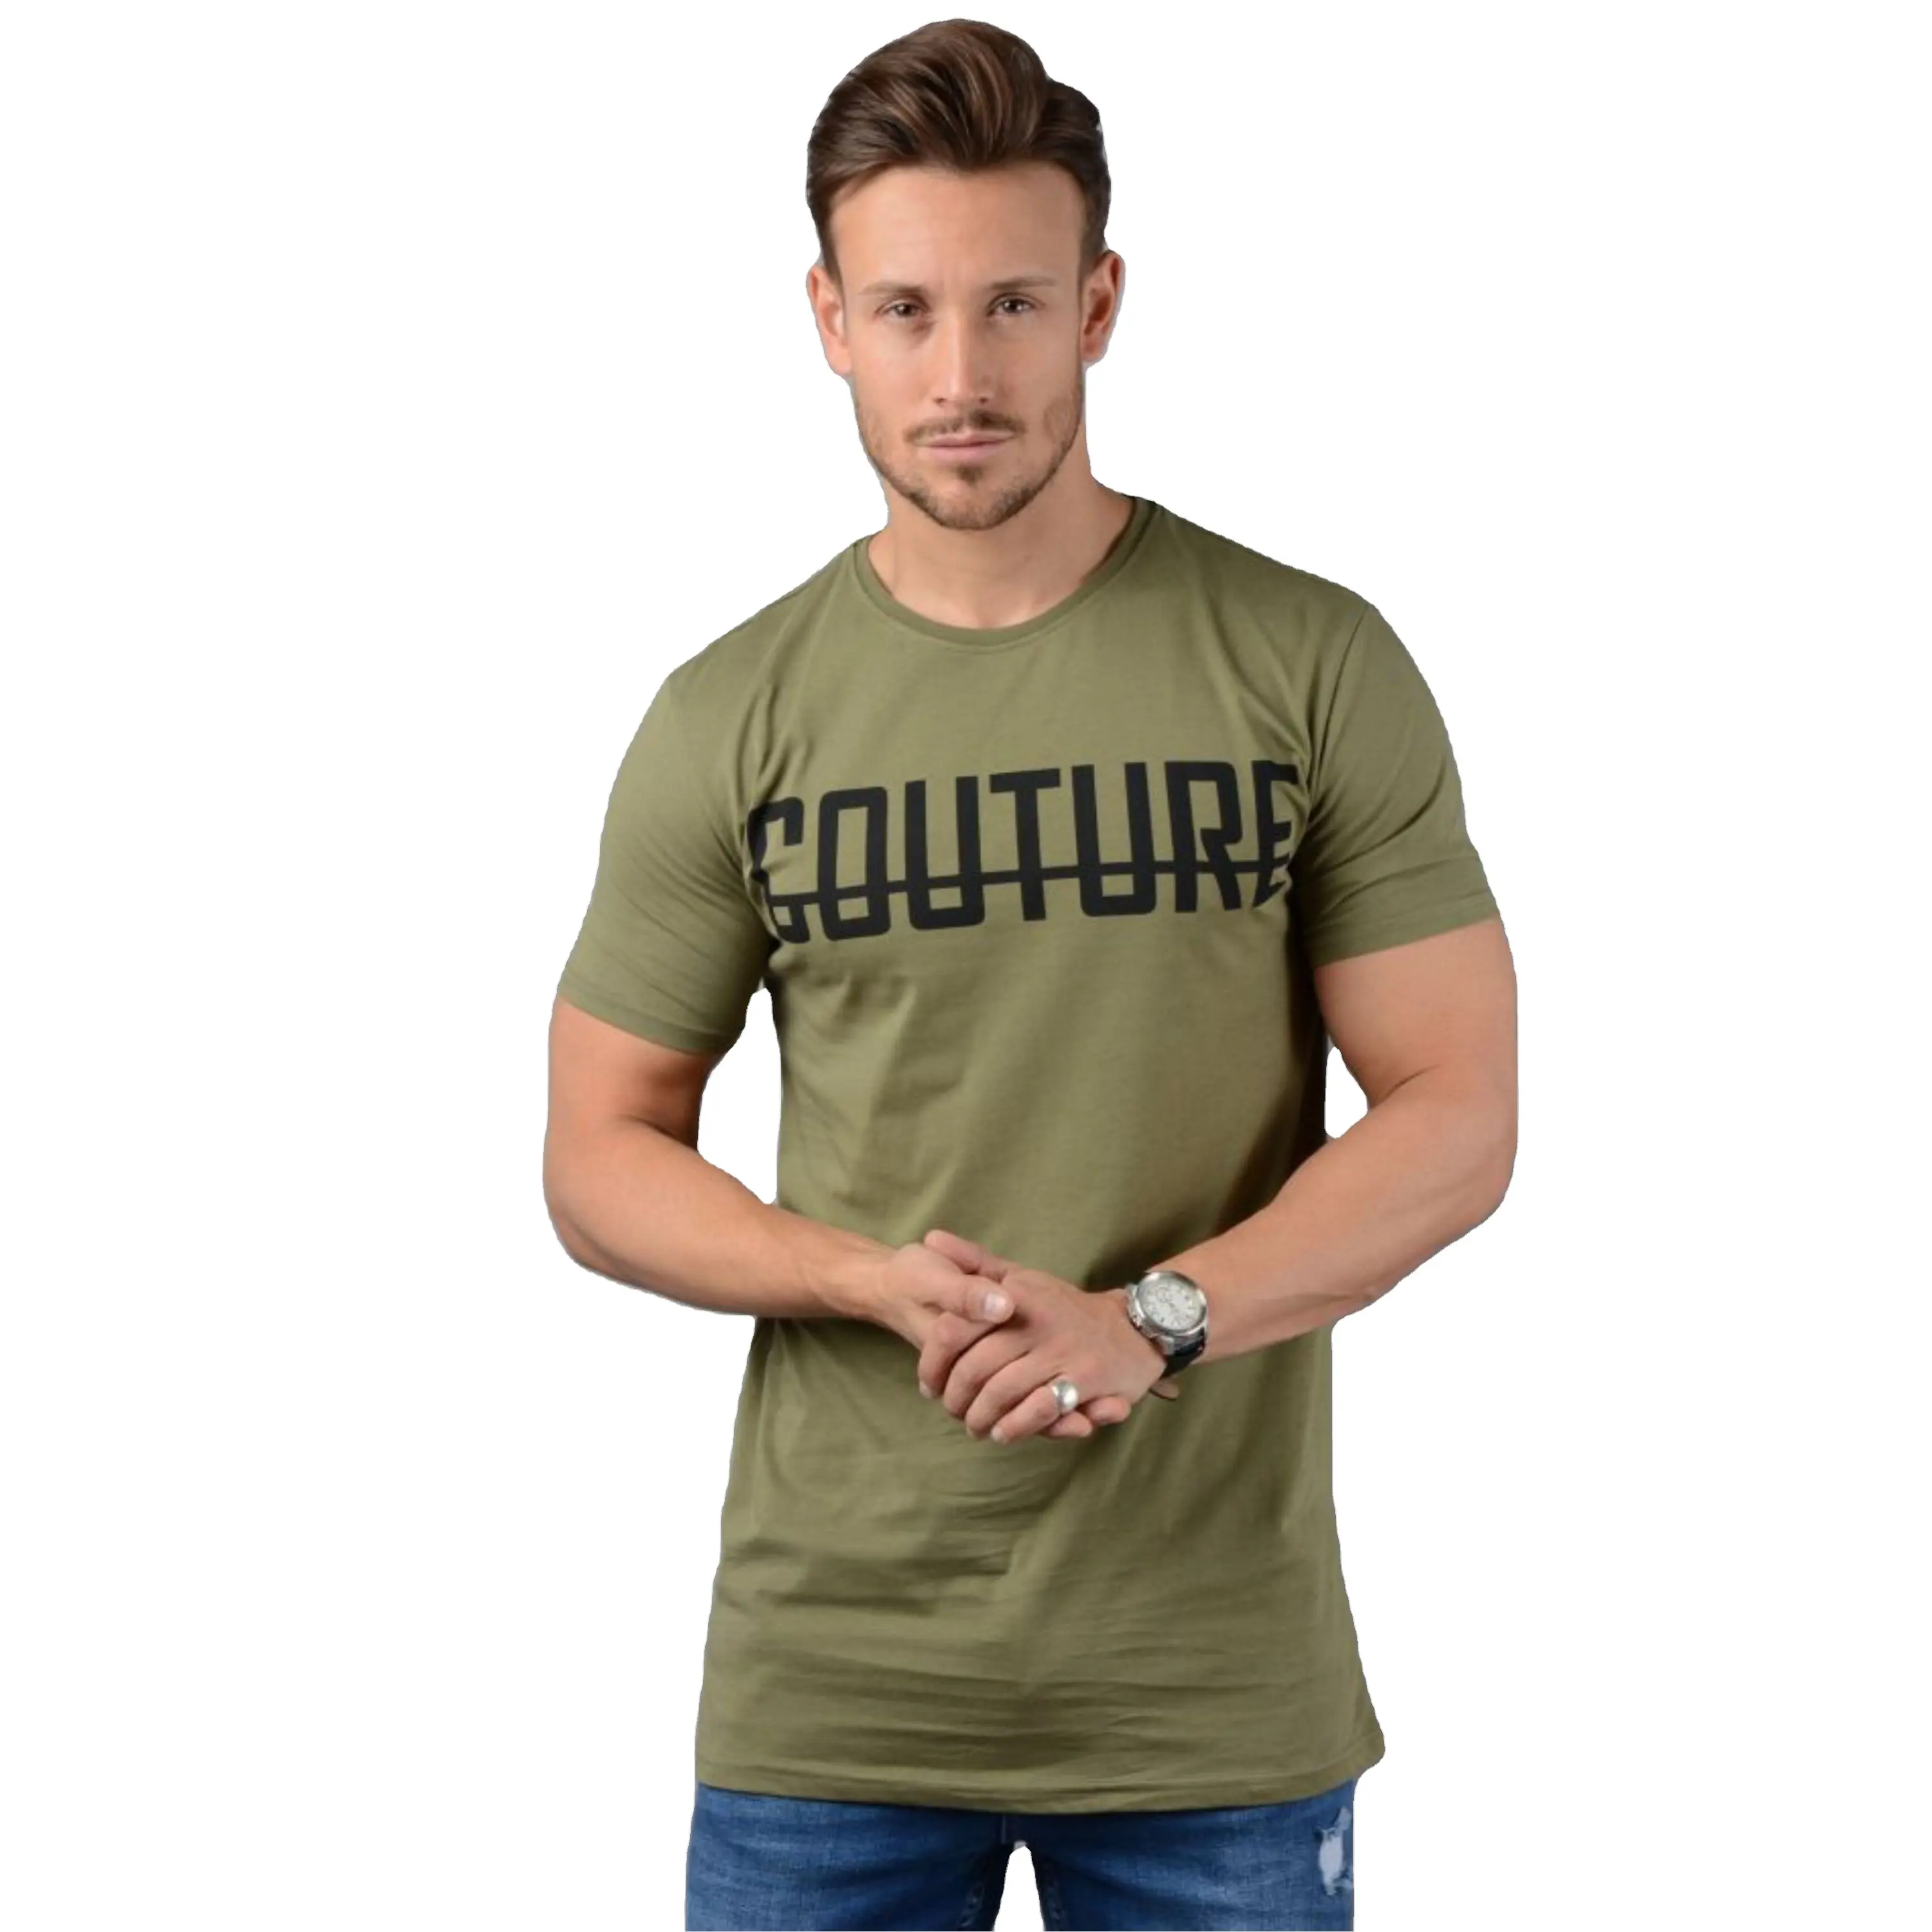 Wholesale Mens Fashion Breathable Plain Longline T-Shirt Khaki/Army Green T Shirt Factory Price Manufacturer